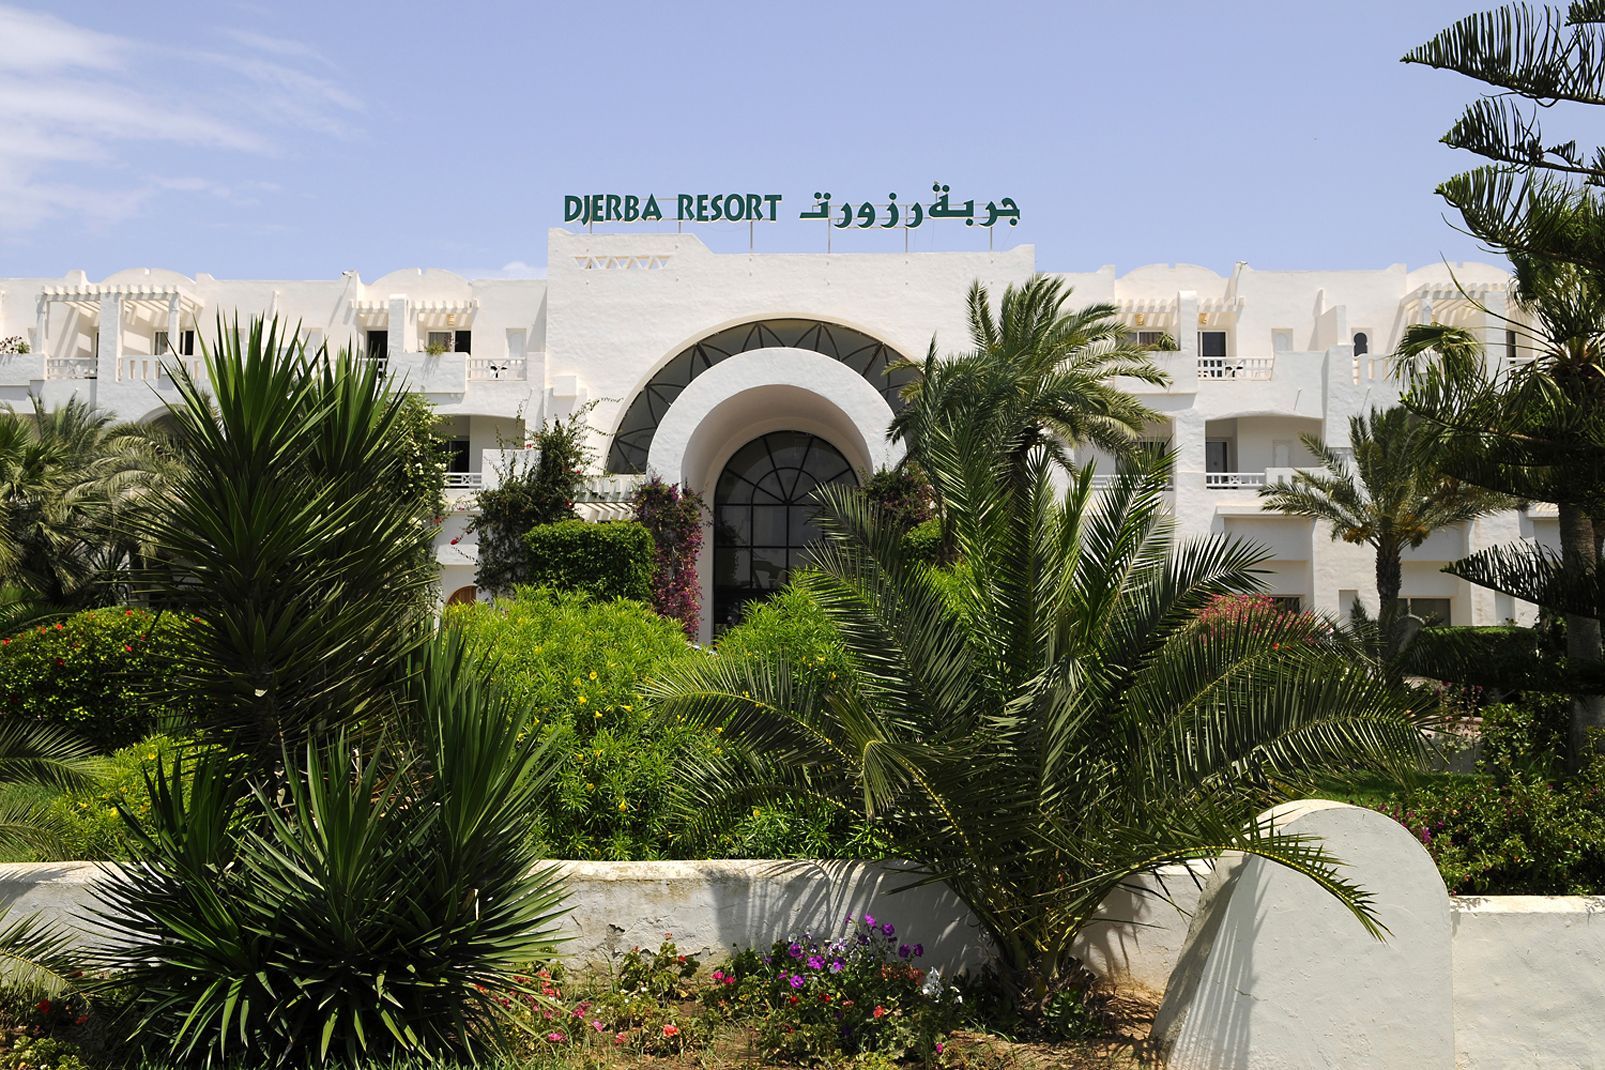 Hôtel Club Jumbo Djerba Resort 4* pas cher photo 2